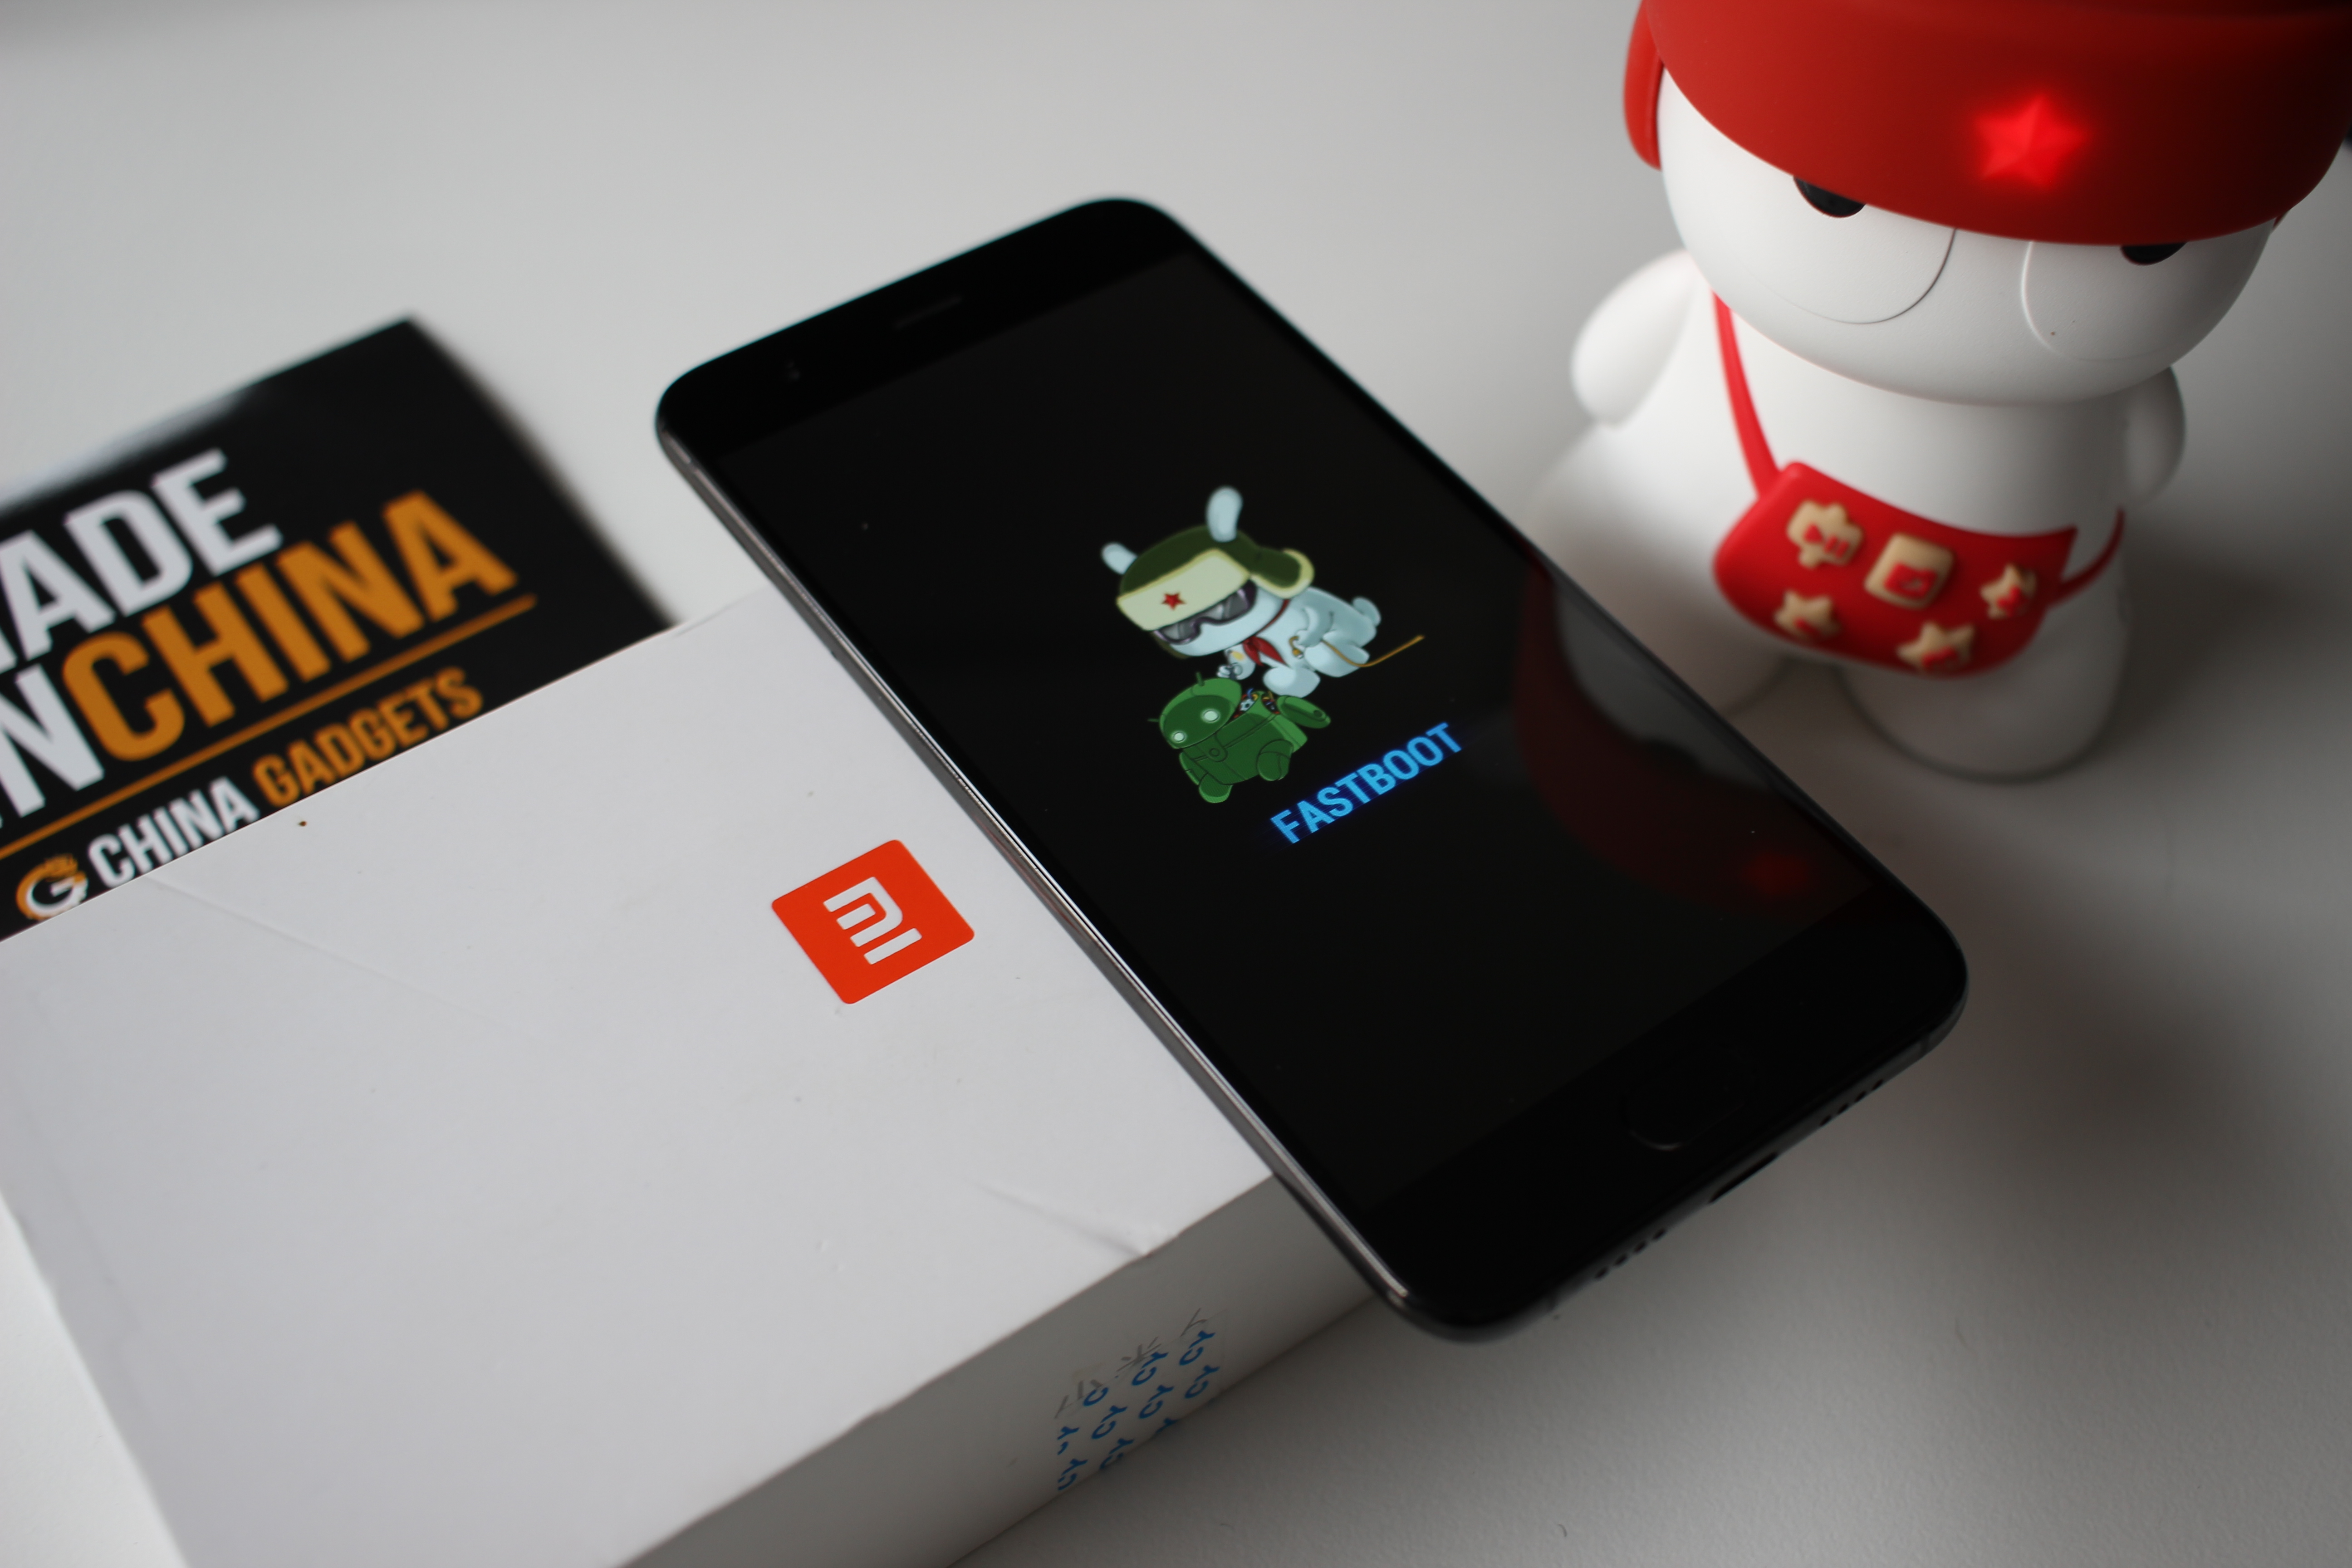 Fastboot Xiaomi Redmi Note